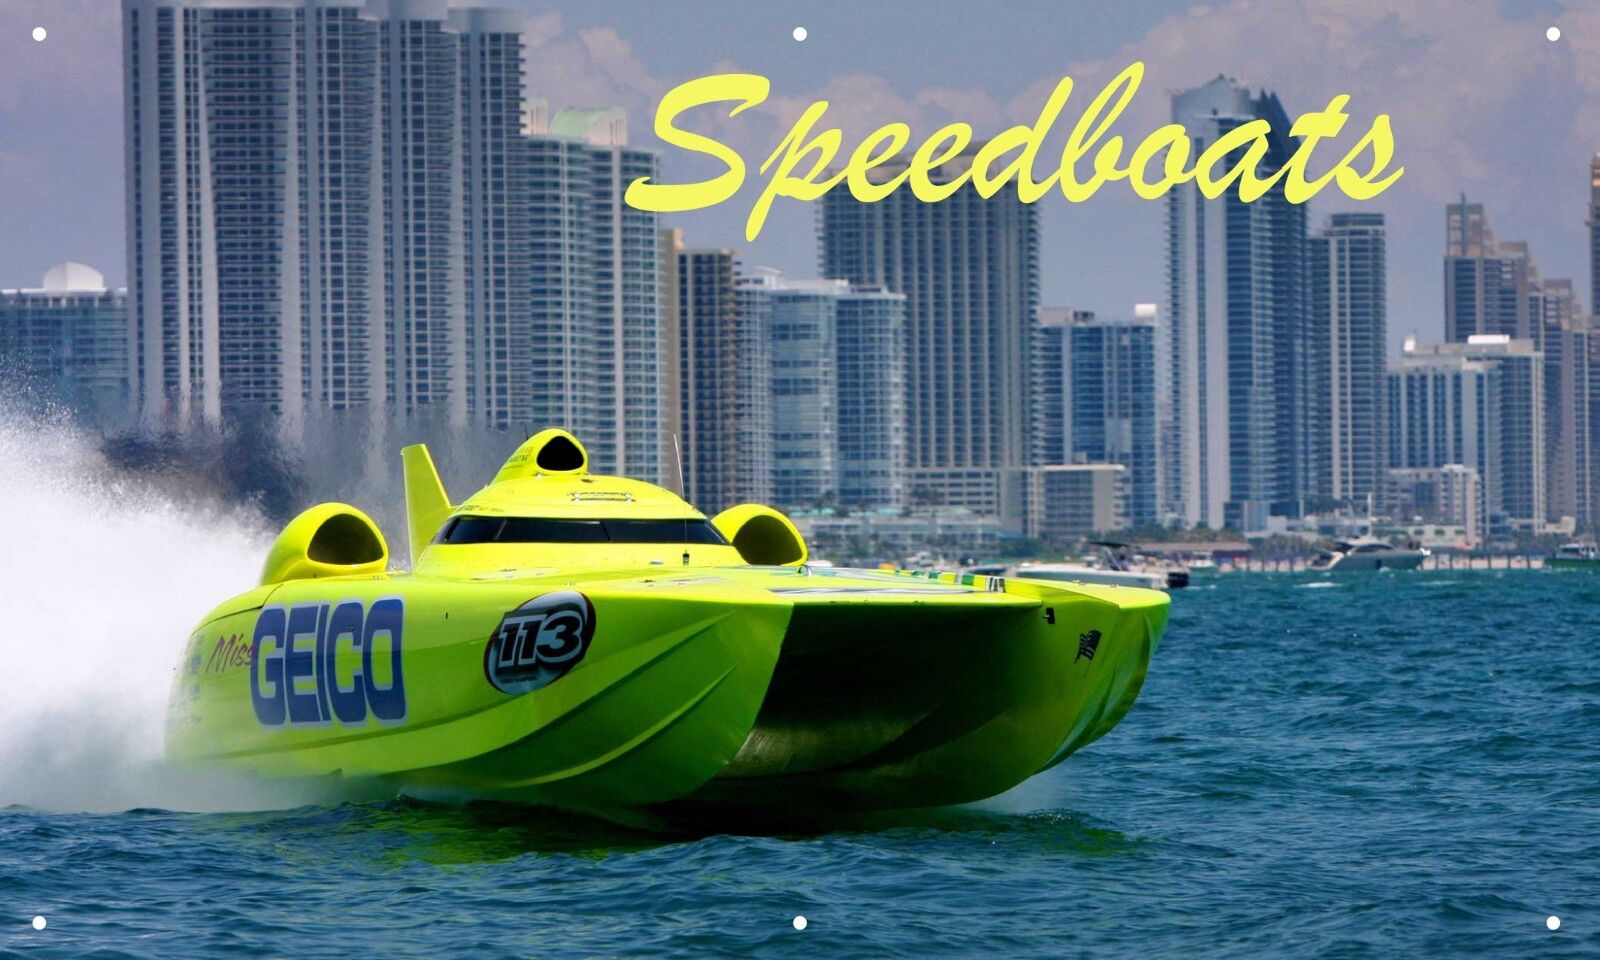 Racing Boat 3'X5' VINYL BANNER GARAGE MAN CAVE SIGN BOAT RACING SPEED BOAT WATER